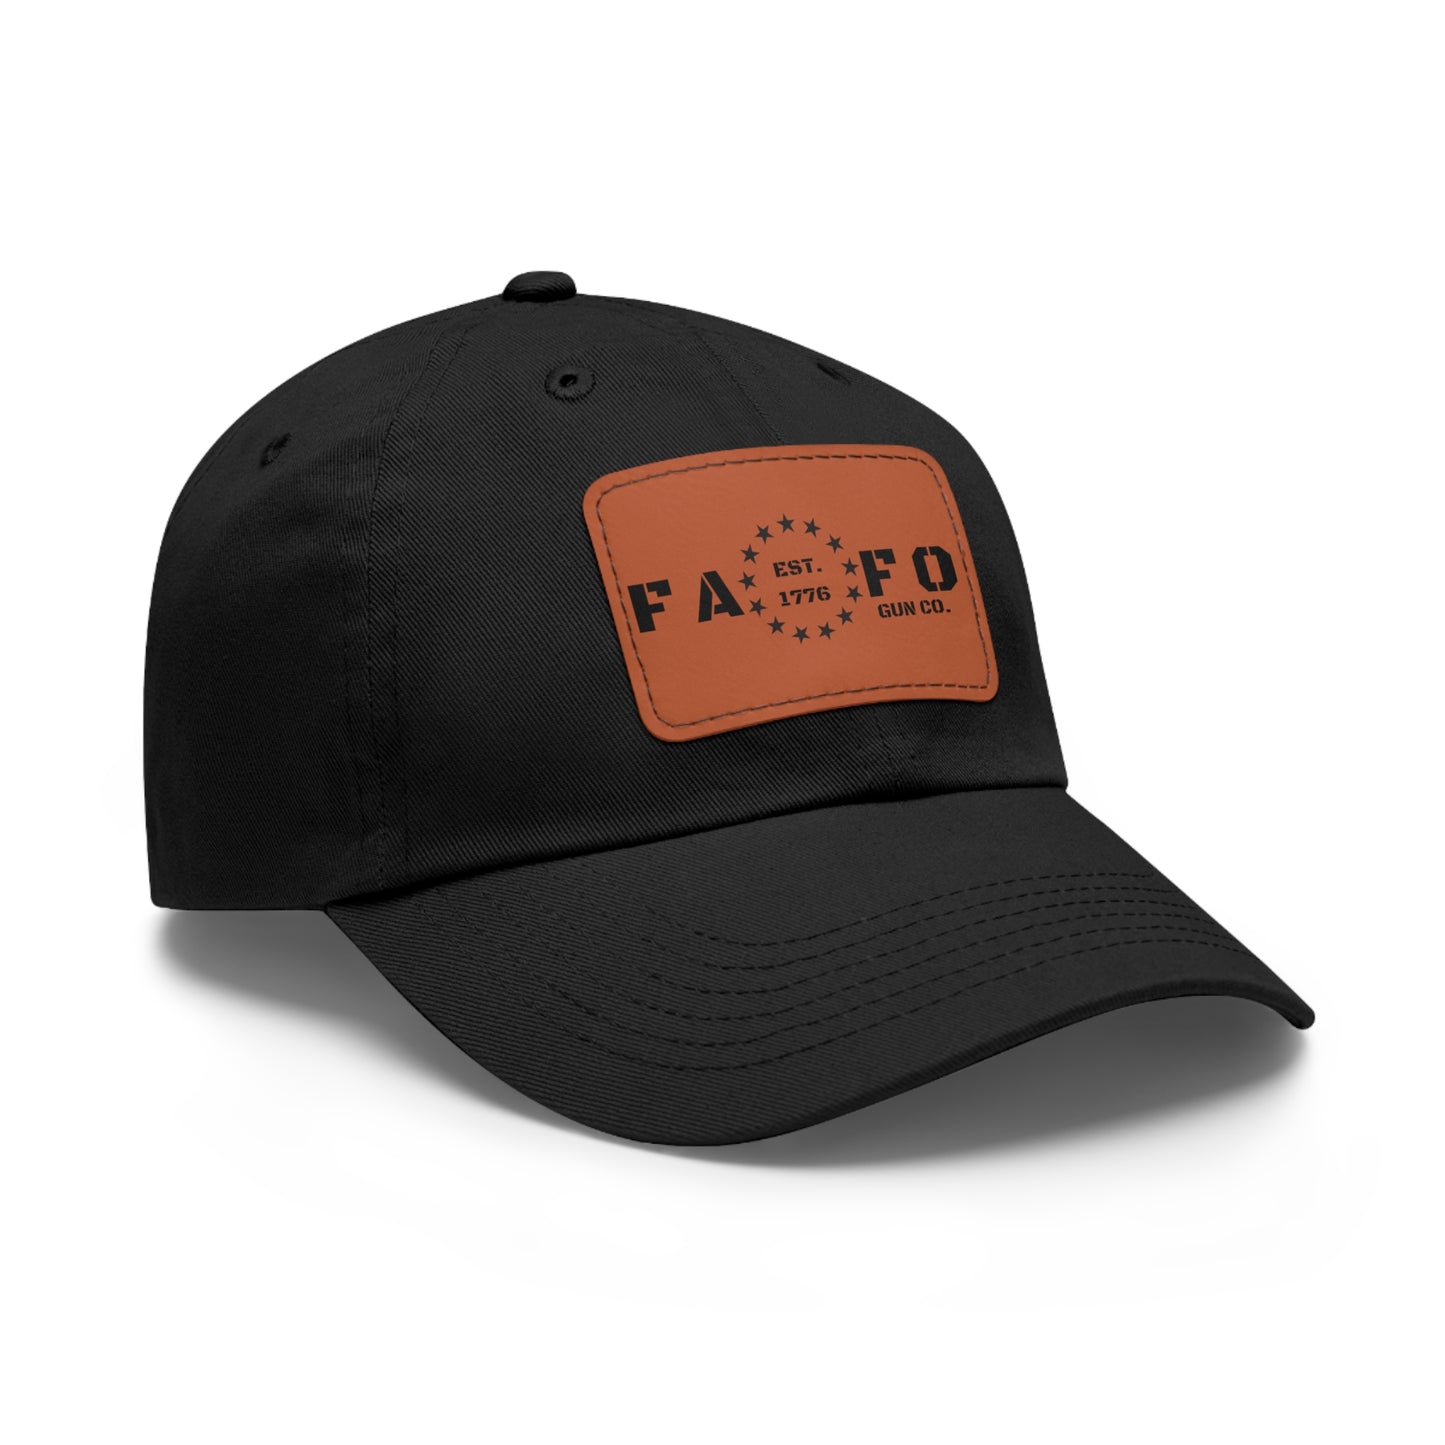 FAFO Gun Co. Logo Leather Patch Hat